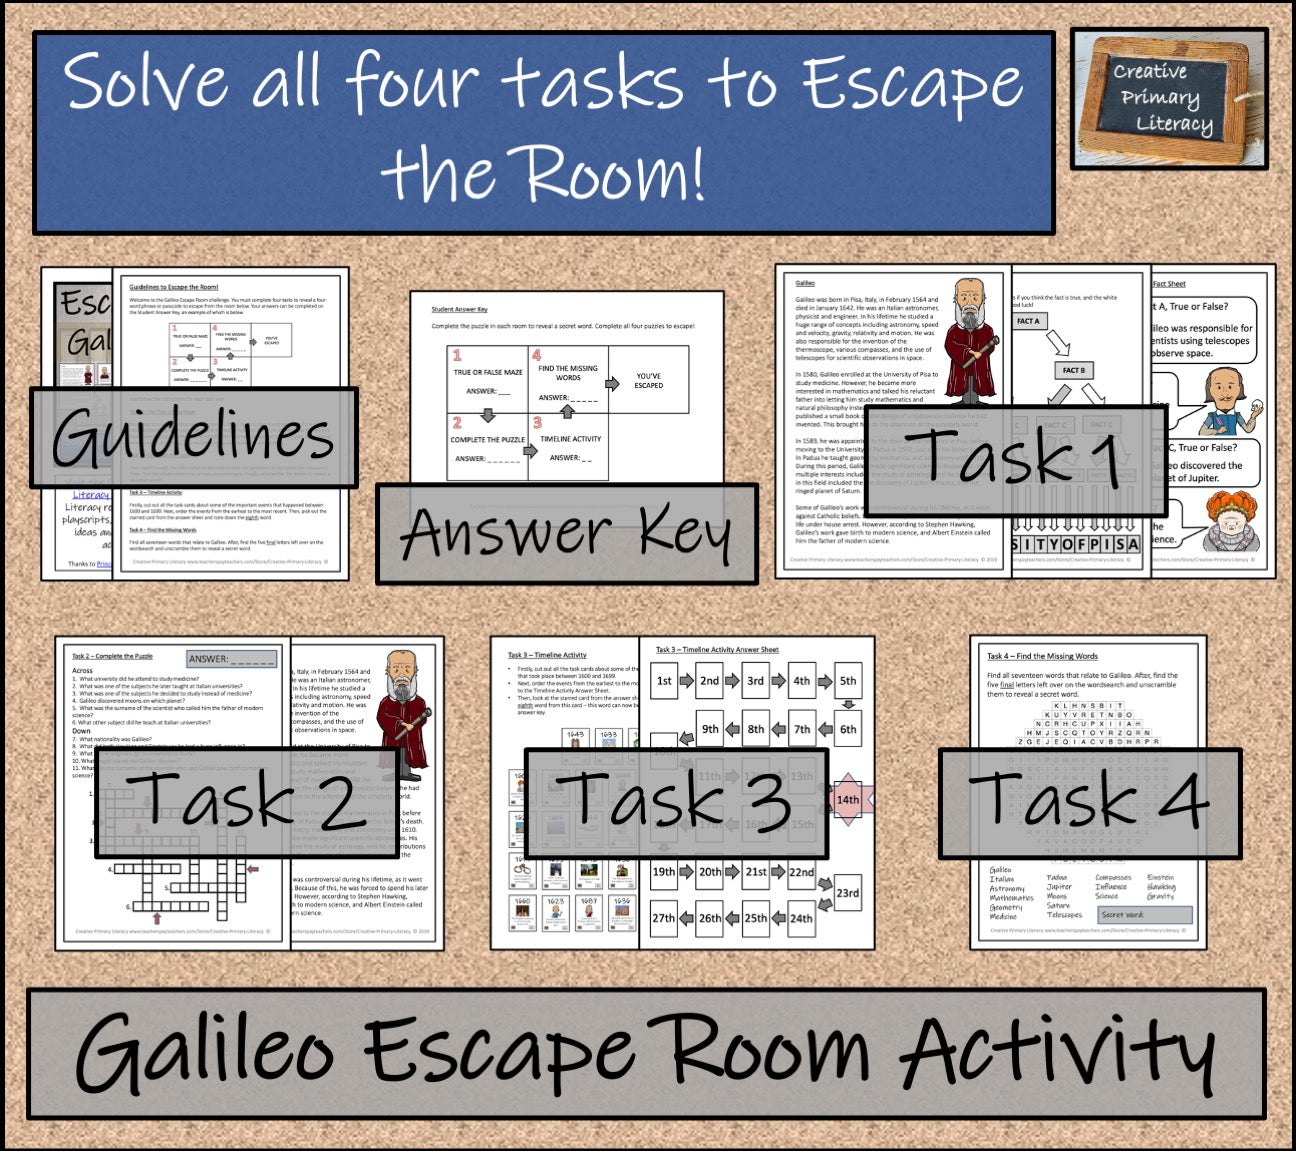 Galileo Escape Room Activity